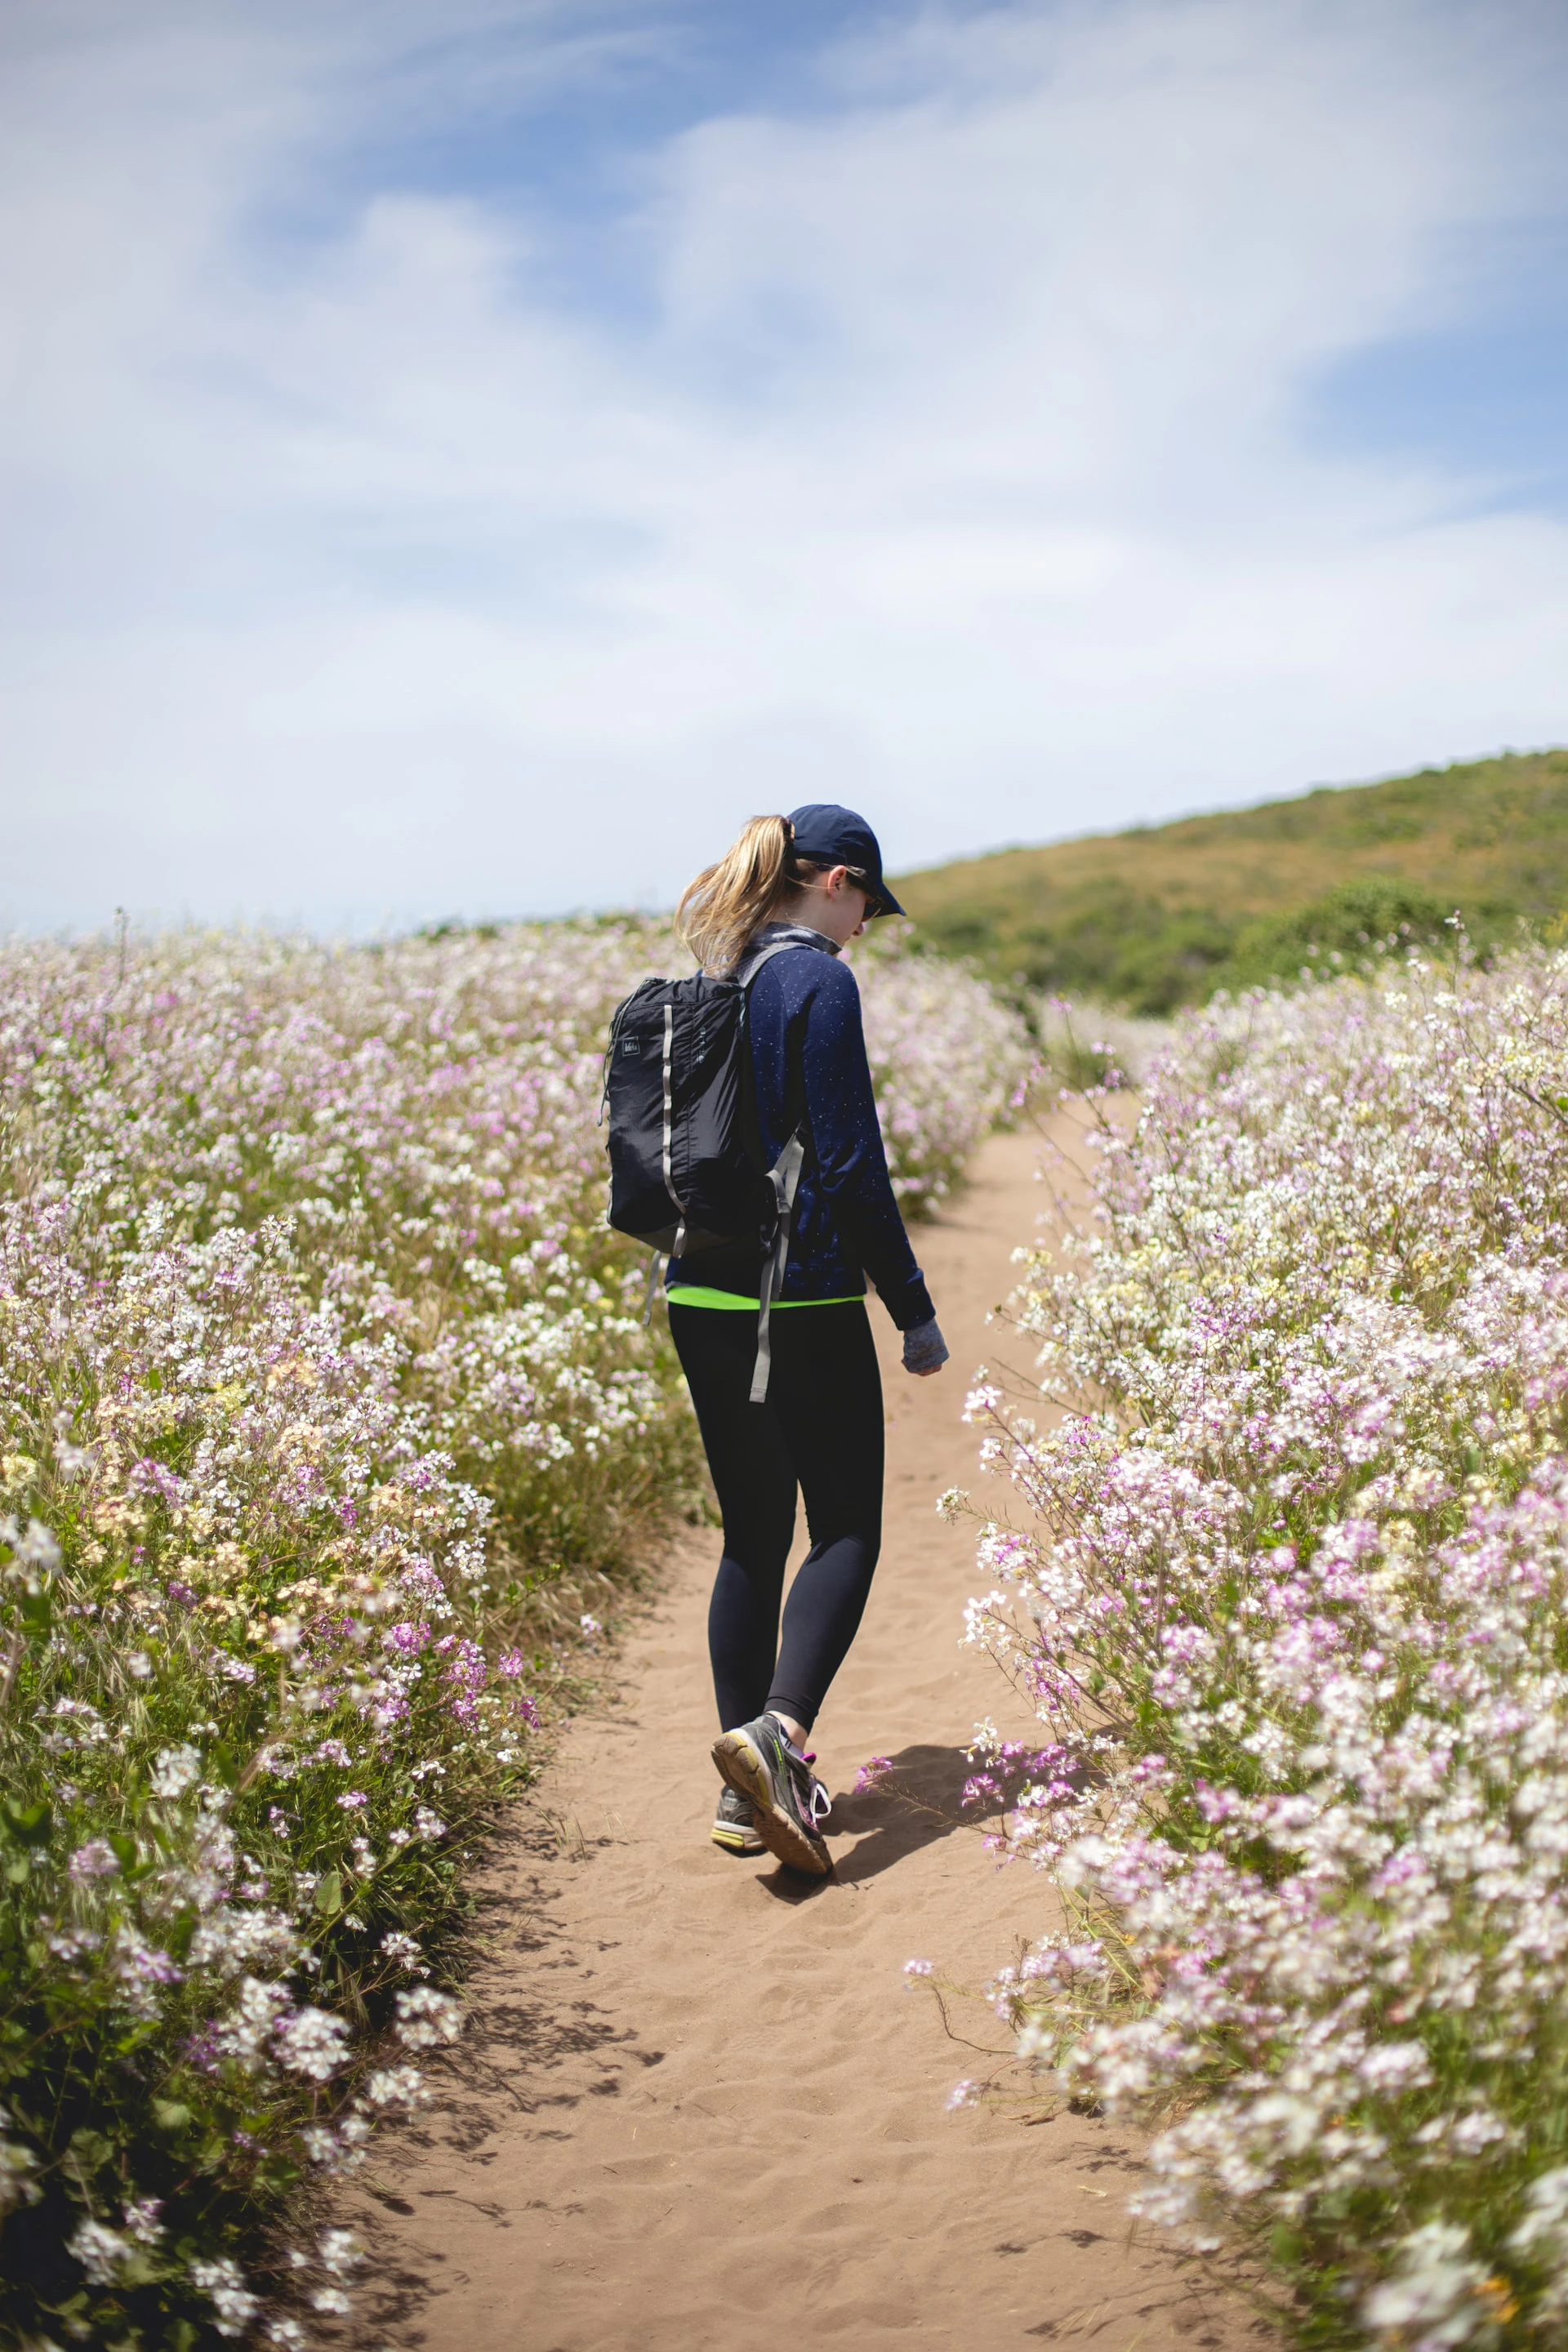 woman wearing dark workout clothes walking on sandy path through flowers